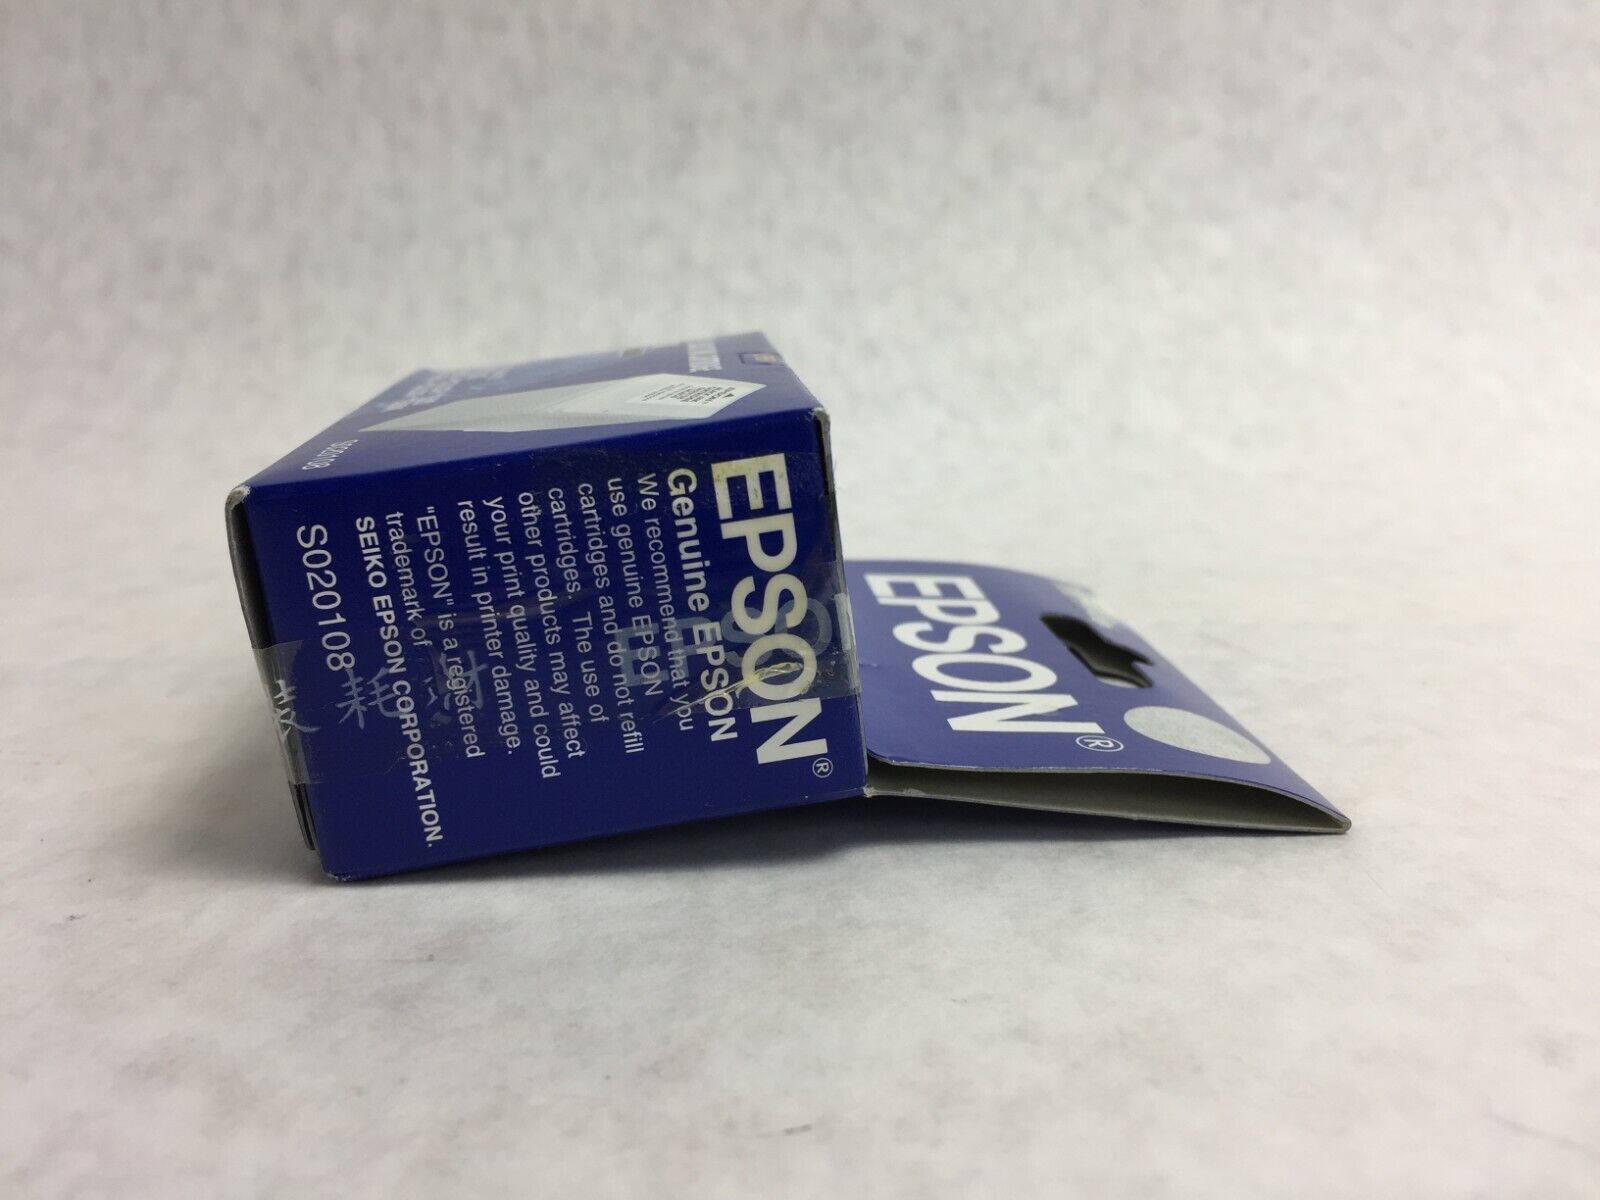 Genuine Epson Black Ink Cartridge S020108